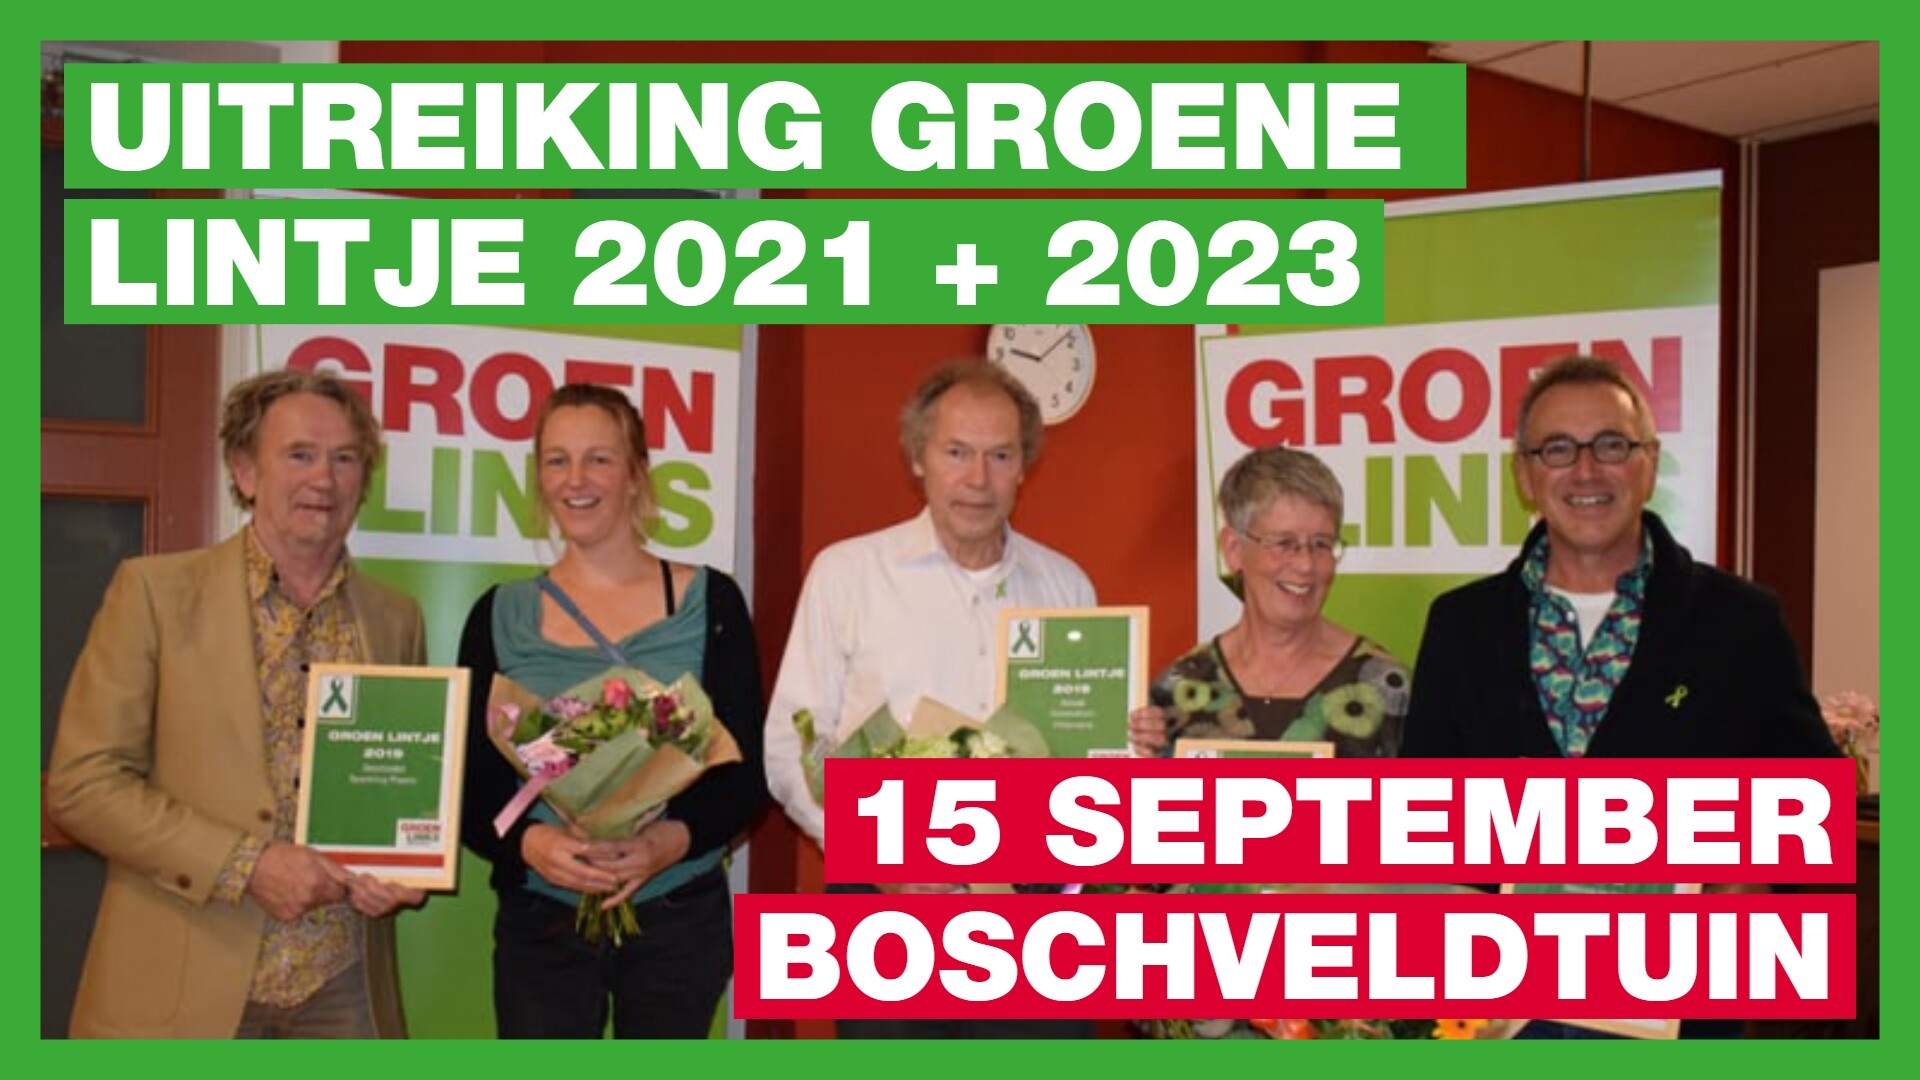 Groene lintje 2021 + 2023